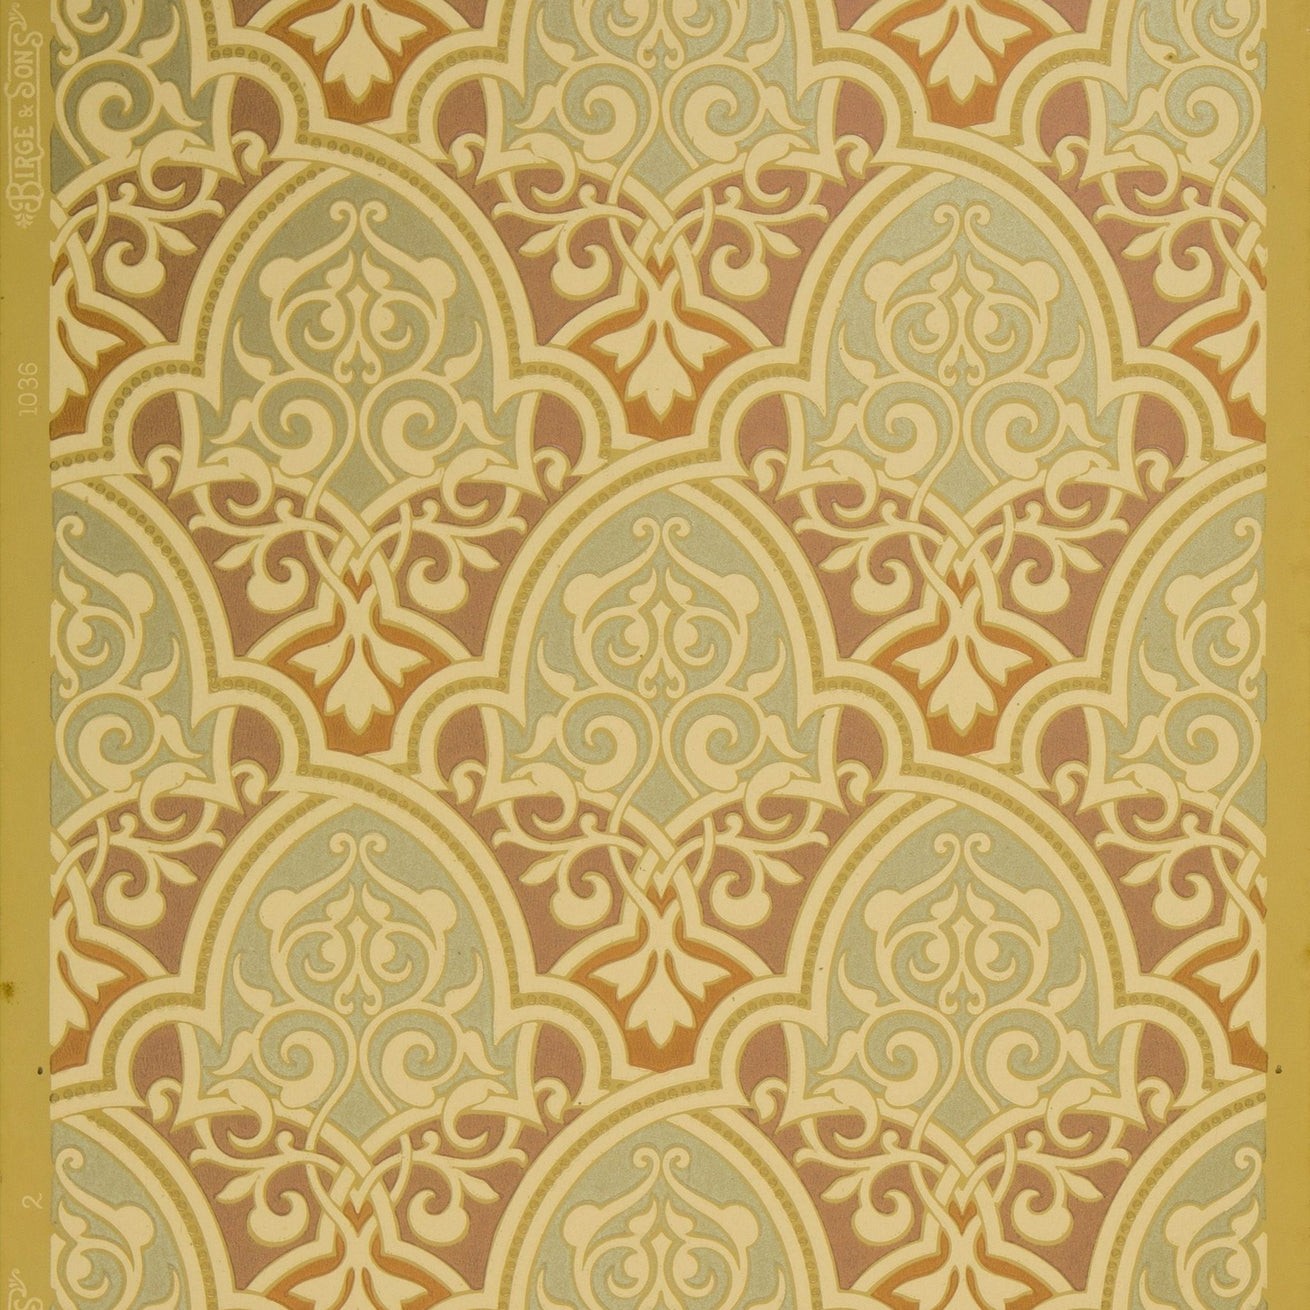 Gilt Moorish Piscine Diaper - Antique Wallpaper Remnant